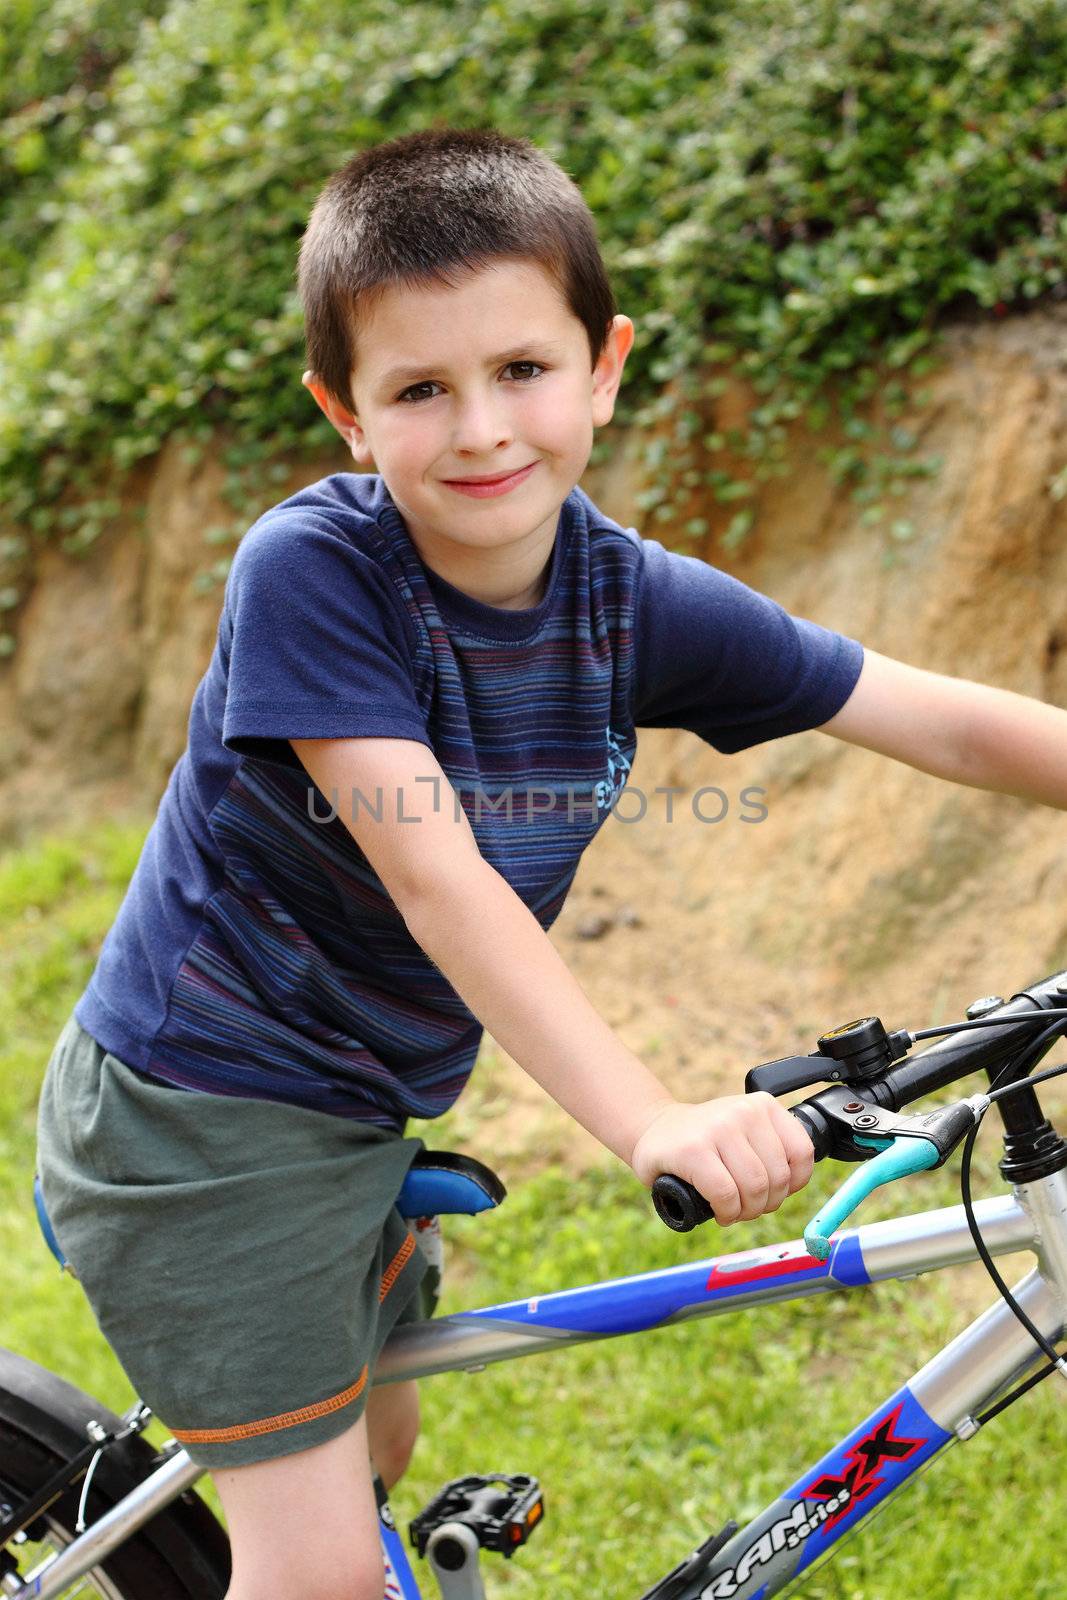 Young biker by artush